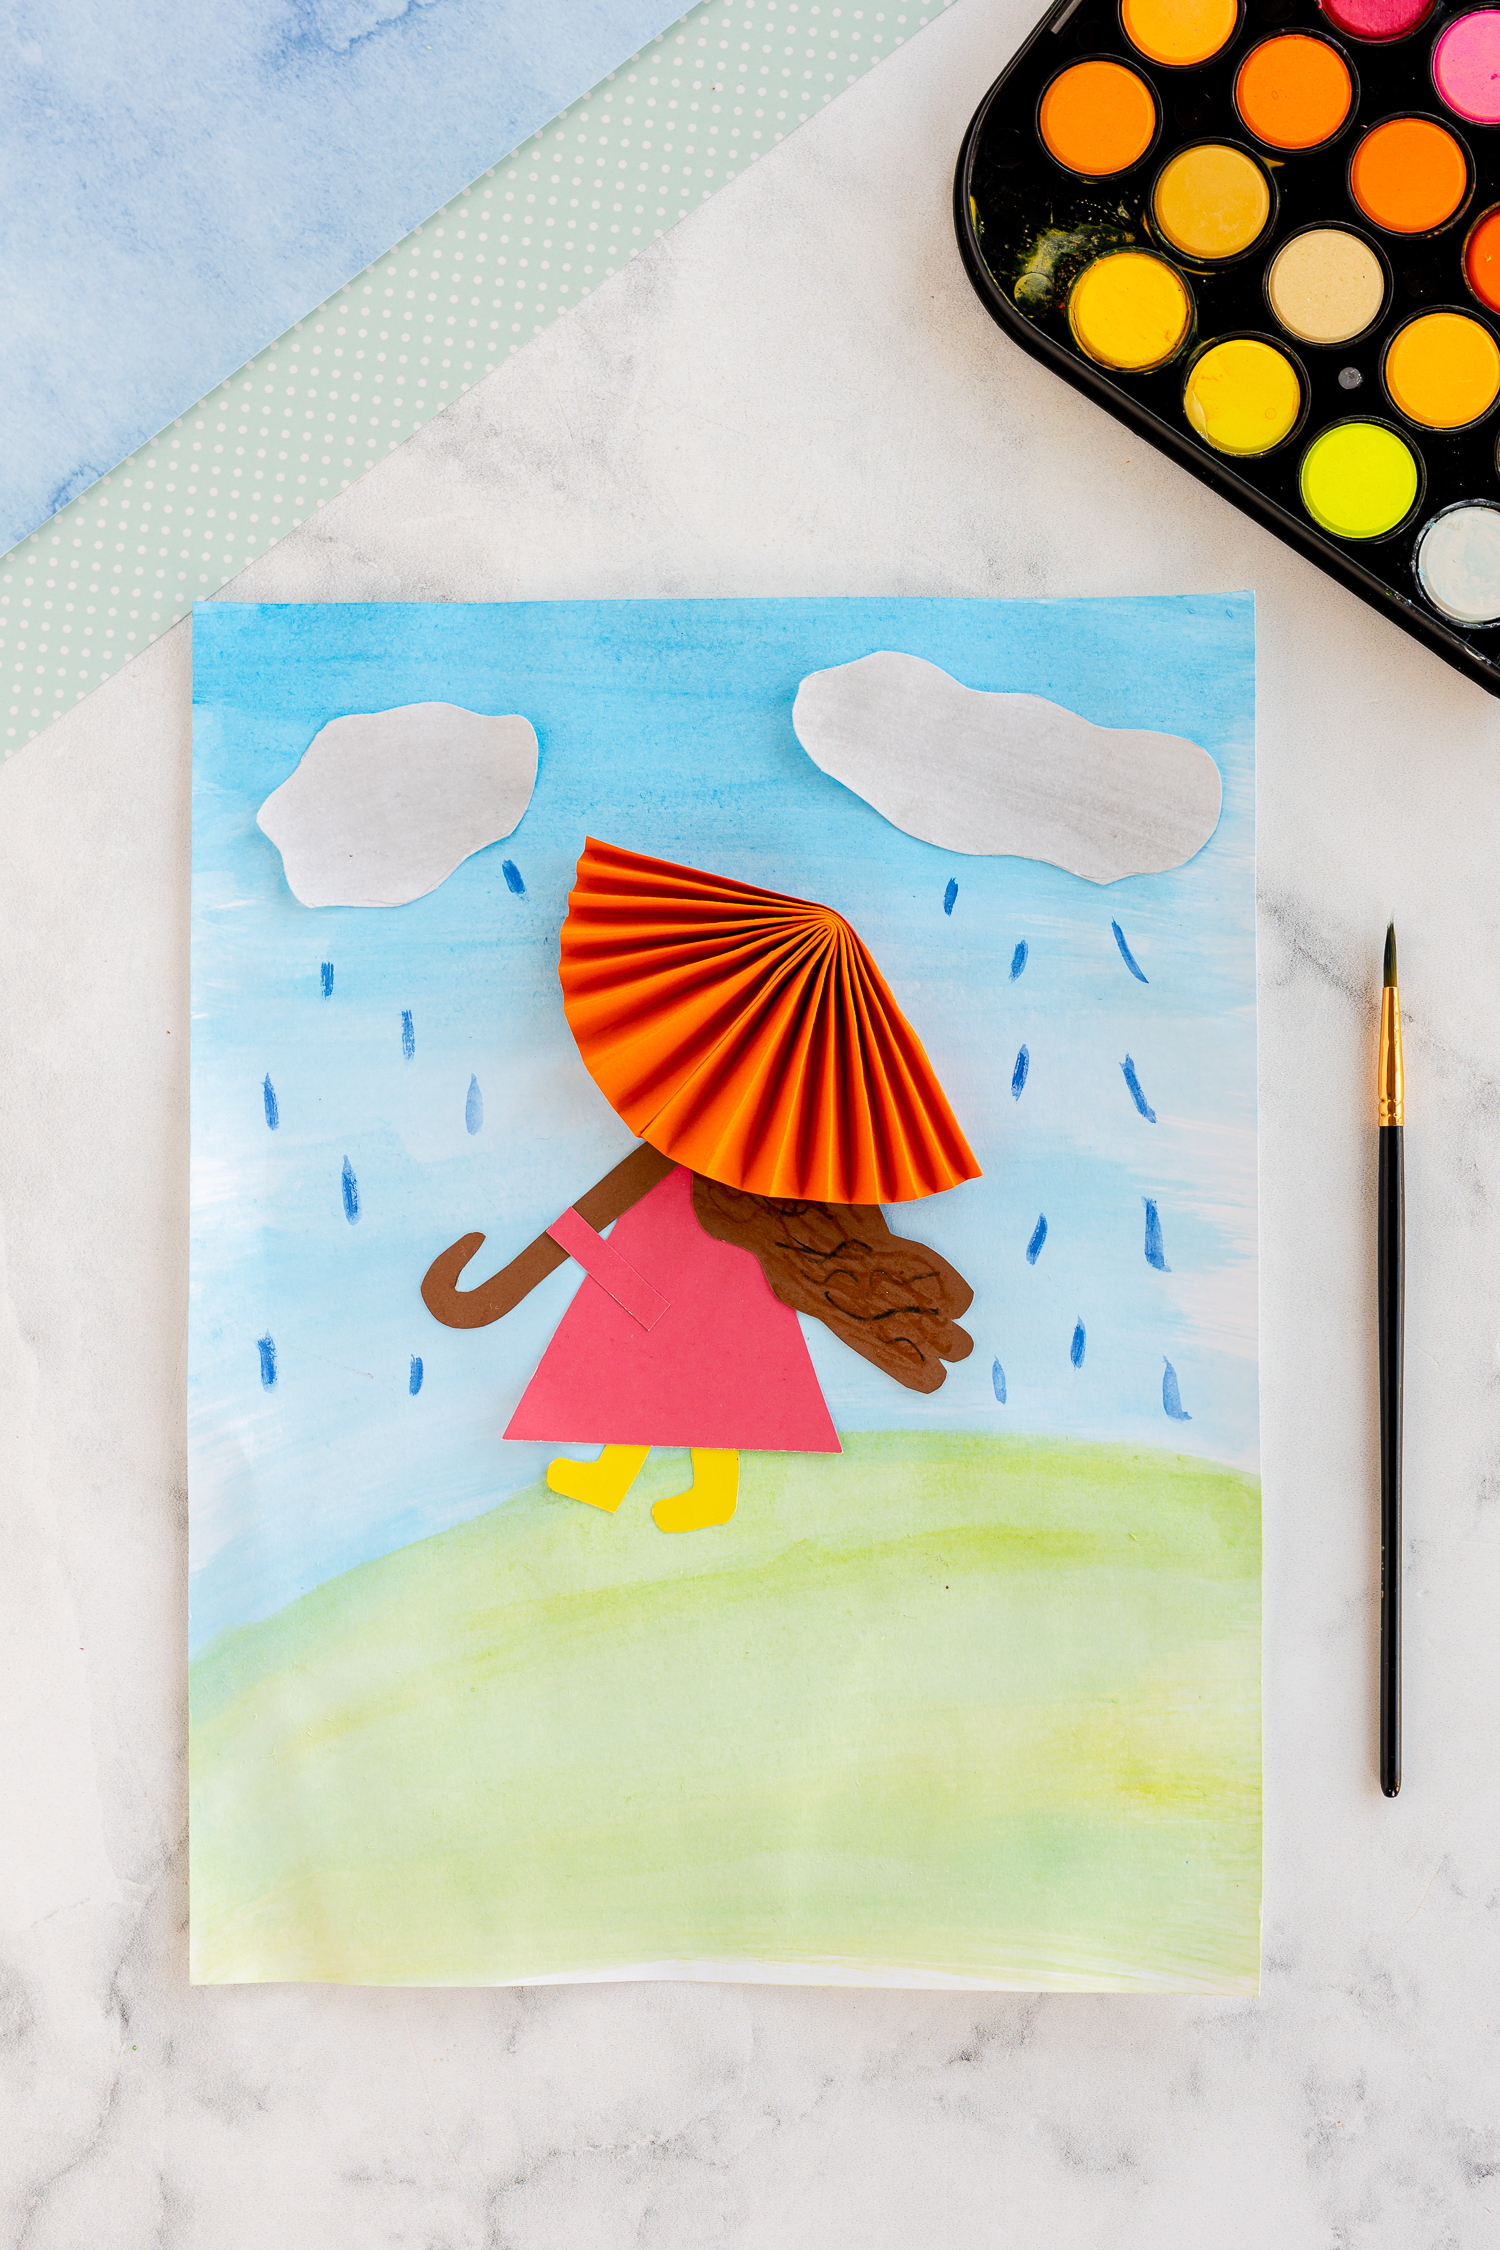 rainy day paper craft - girl with umbrella